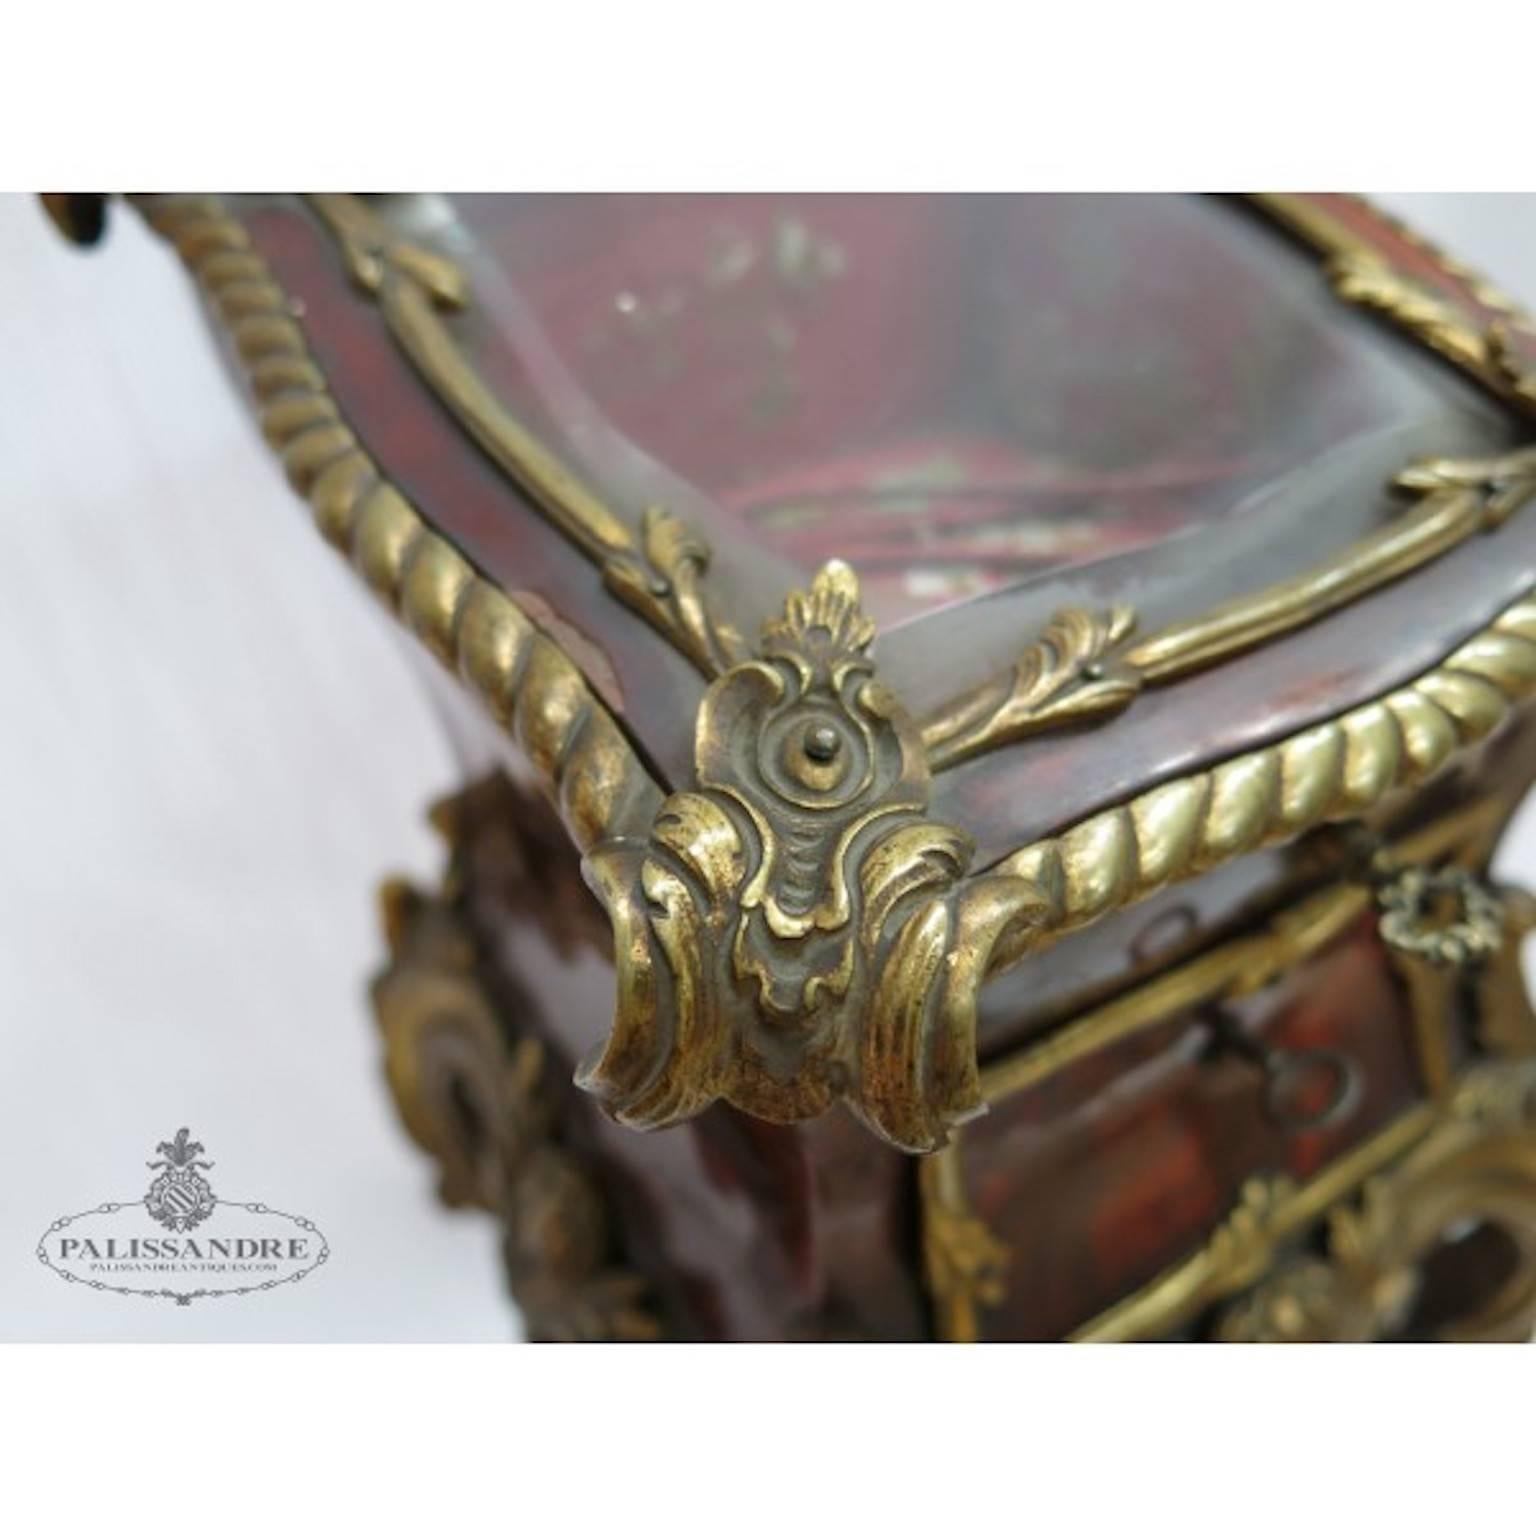 Elegant jeweller made in bronze and hawksbill.